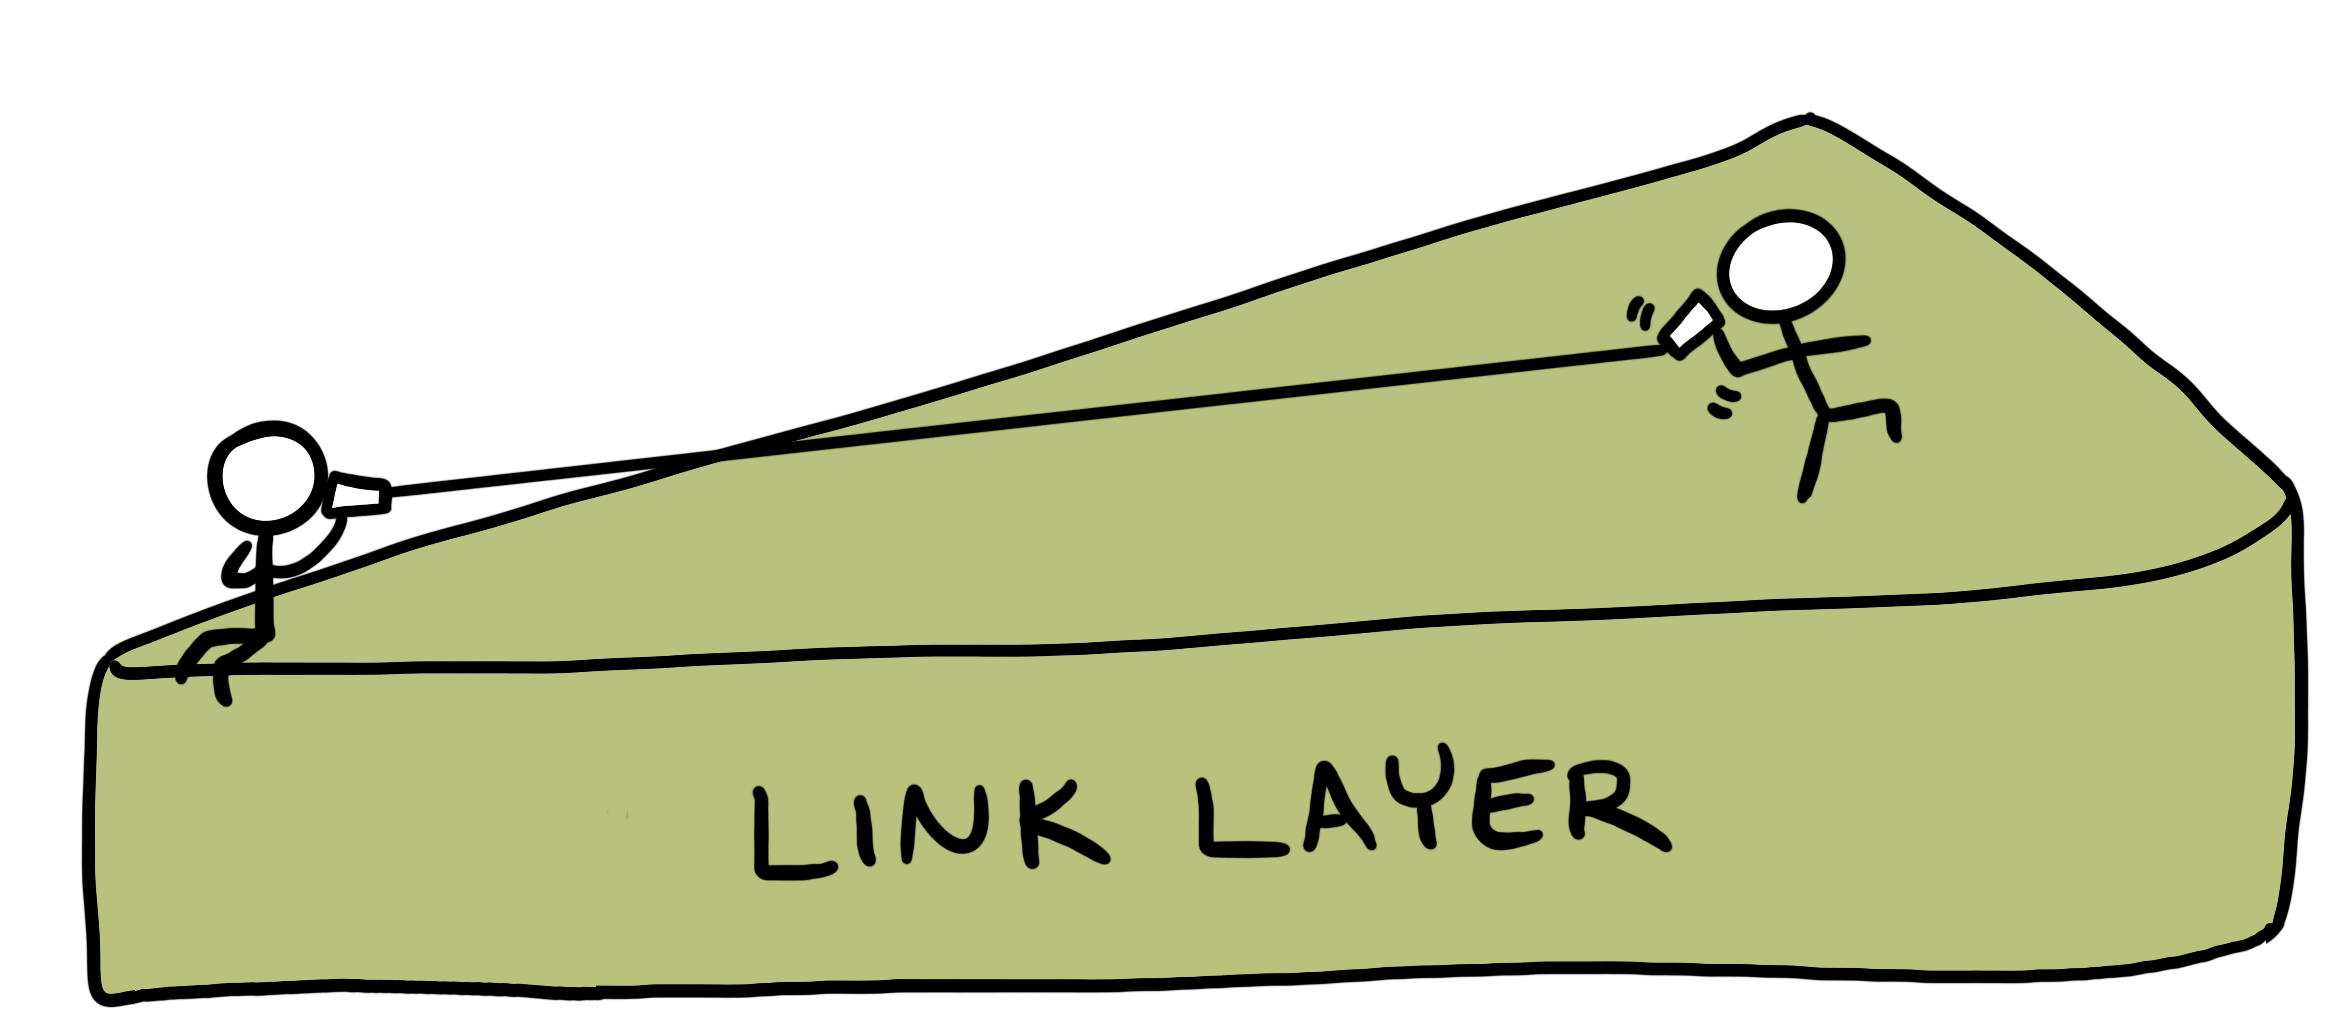 Link cake layer cartoon